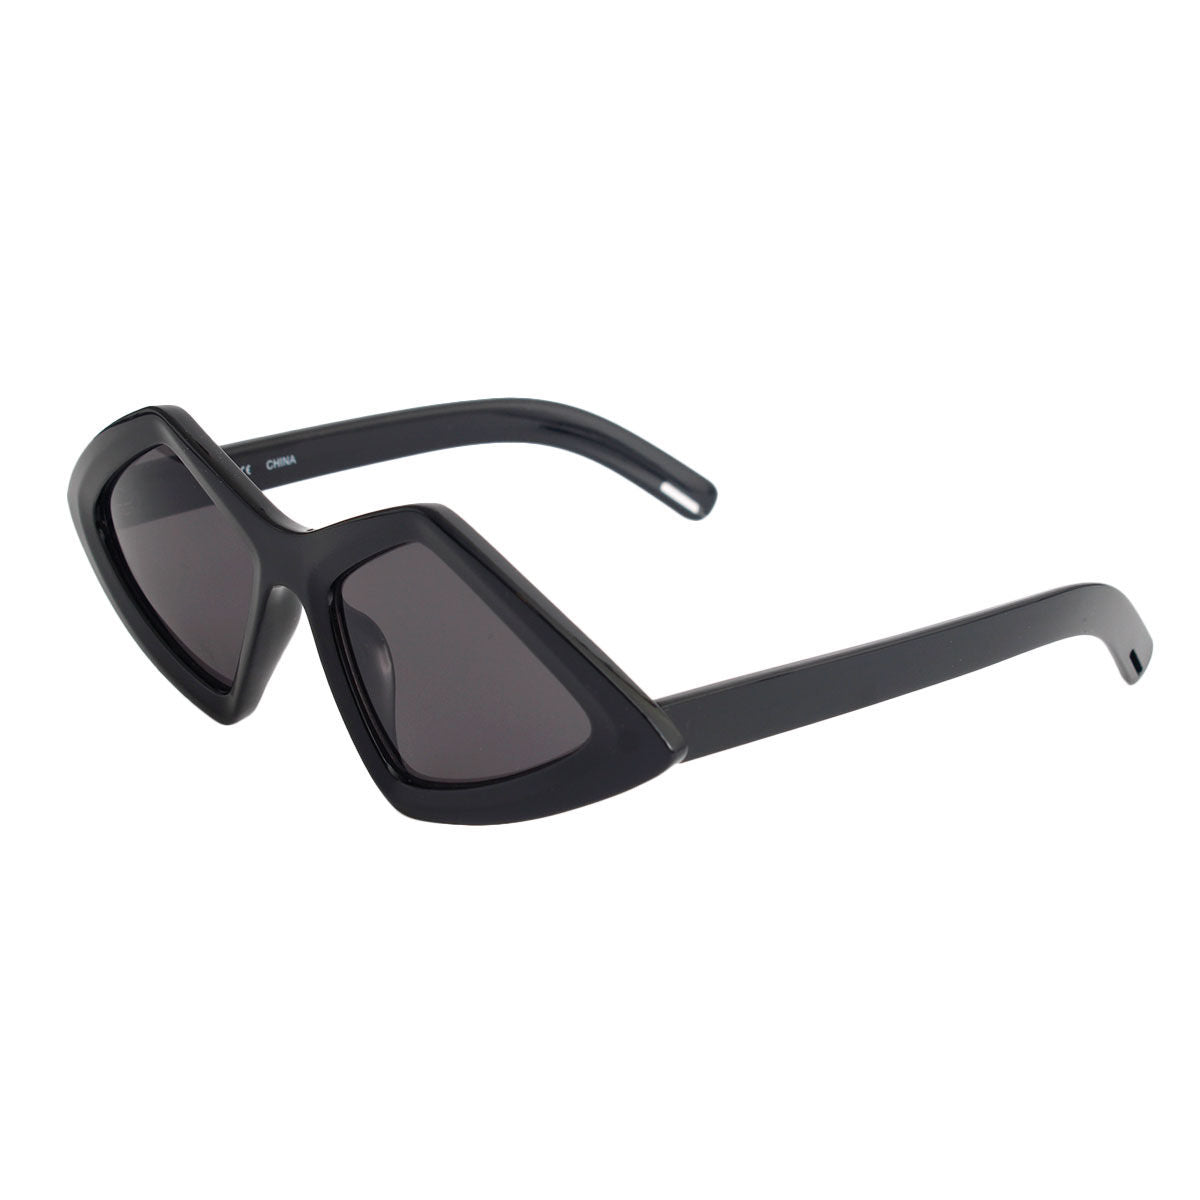  Prism Pointe Black Sunglasses at Fancy5Fashion.com